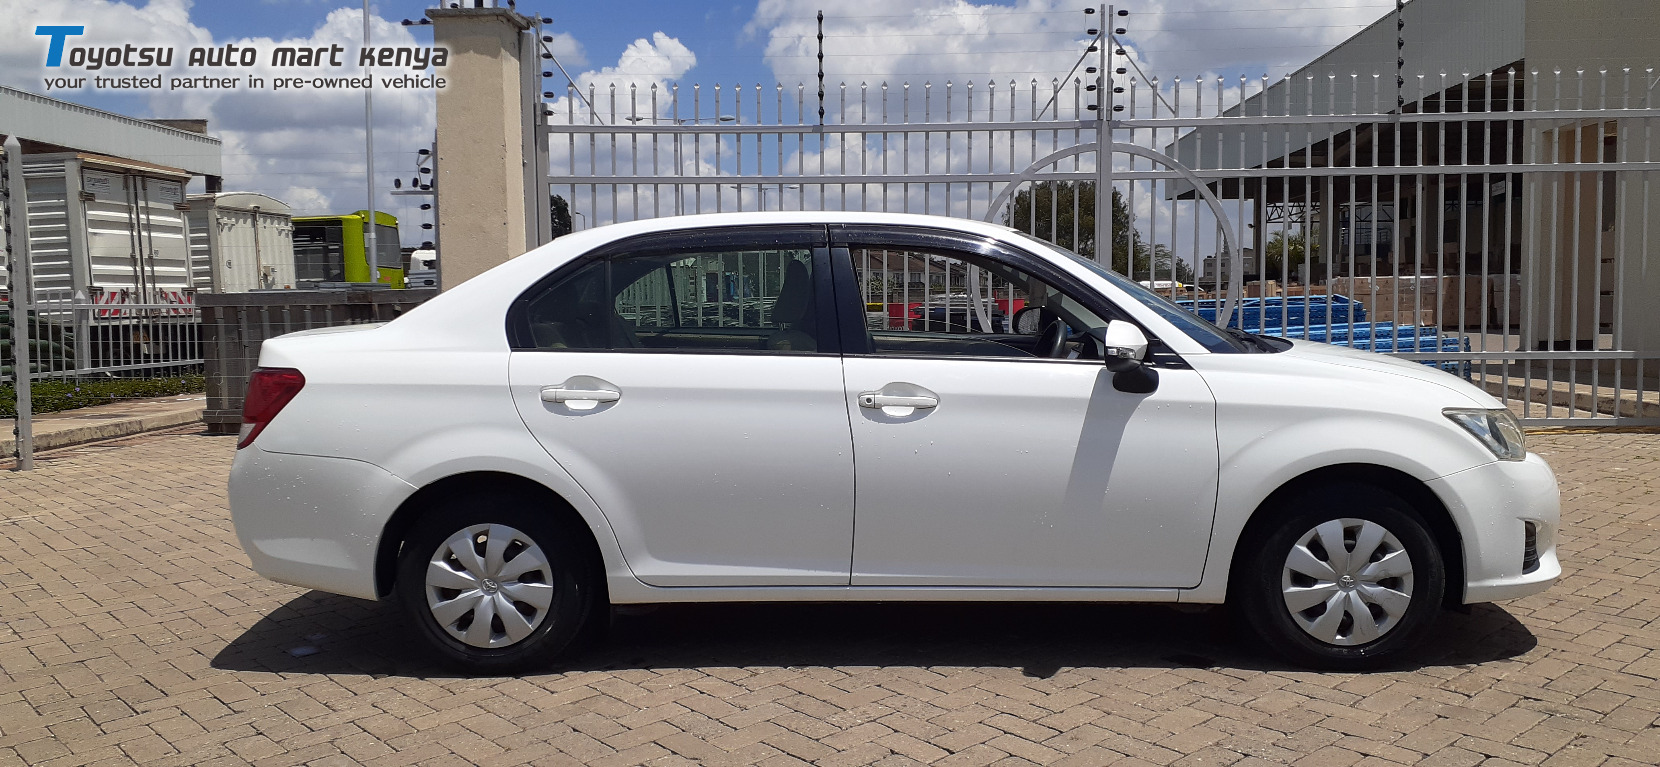 2012 Toyota Axio  Used Car For Sale  Toyotsu Auto Mart Kenya